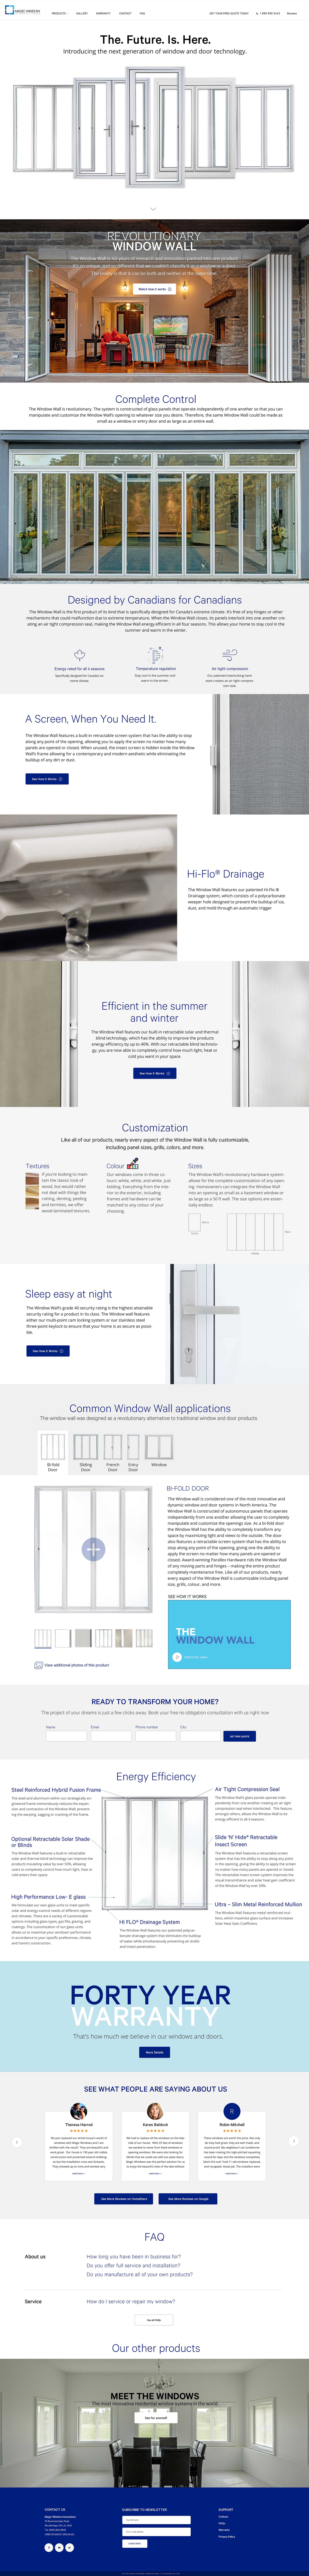 MWI window wall page